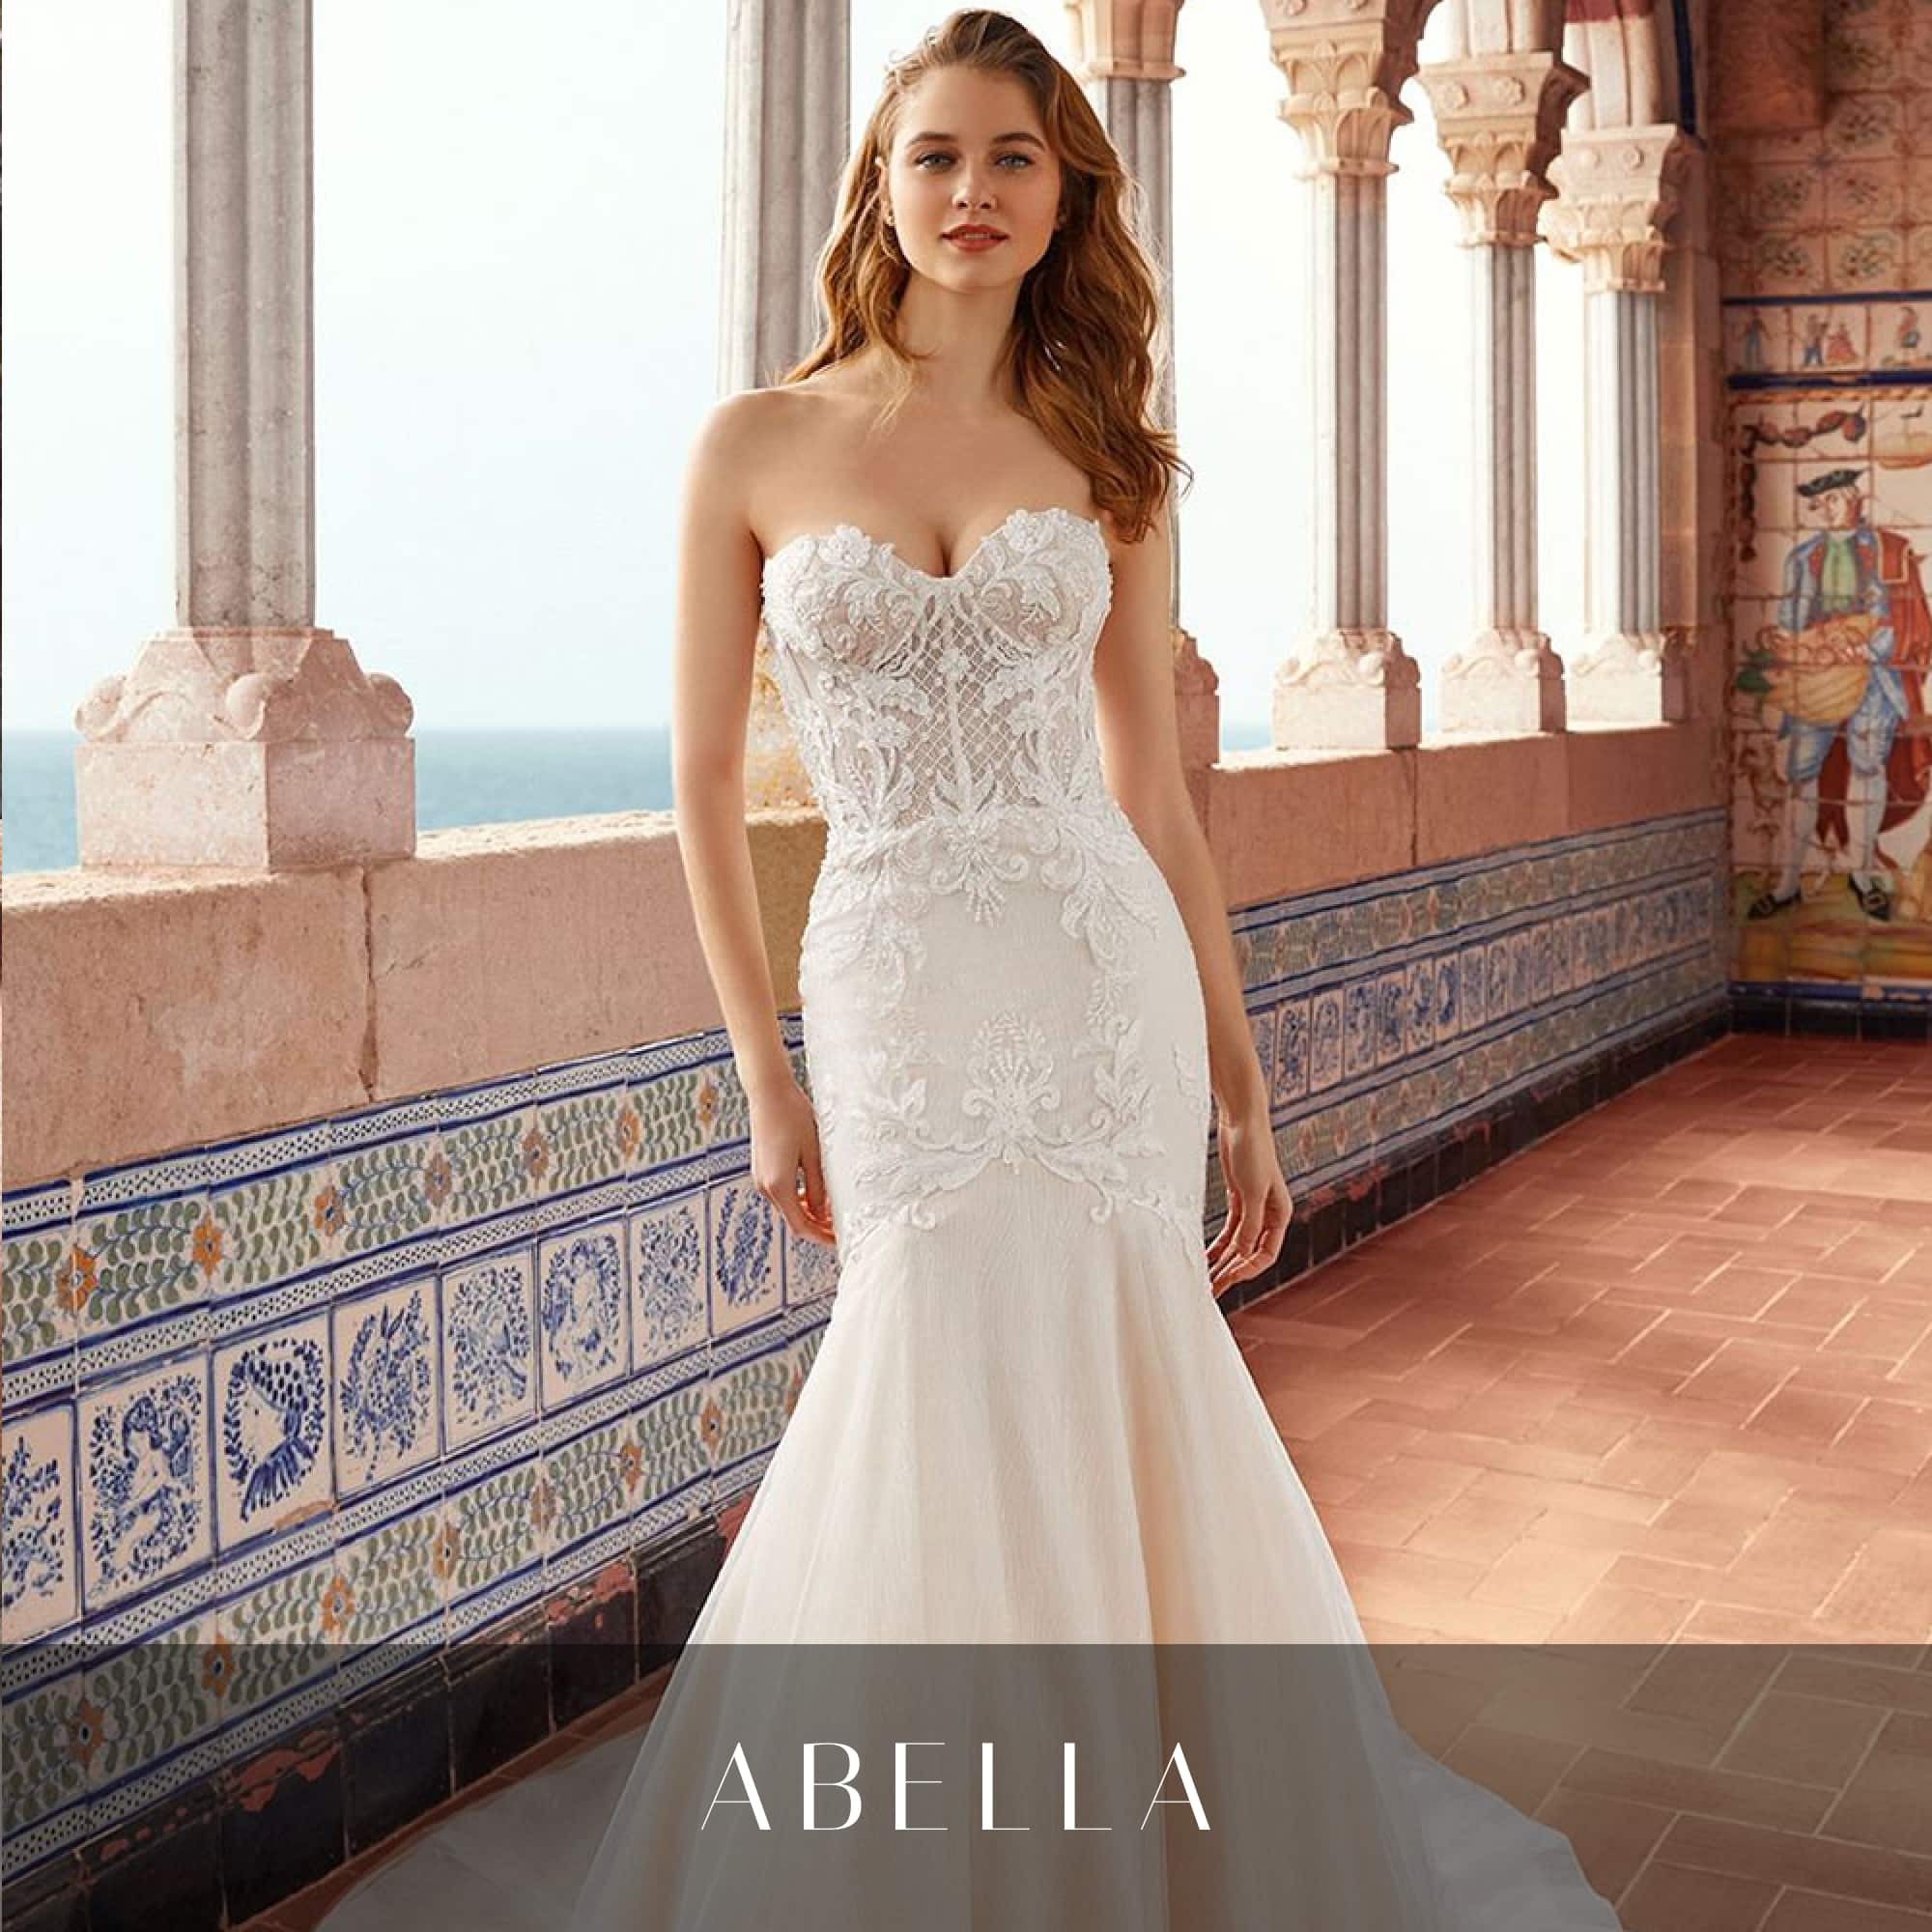 Abella Wedding Dresses